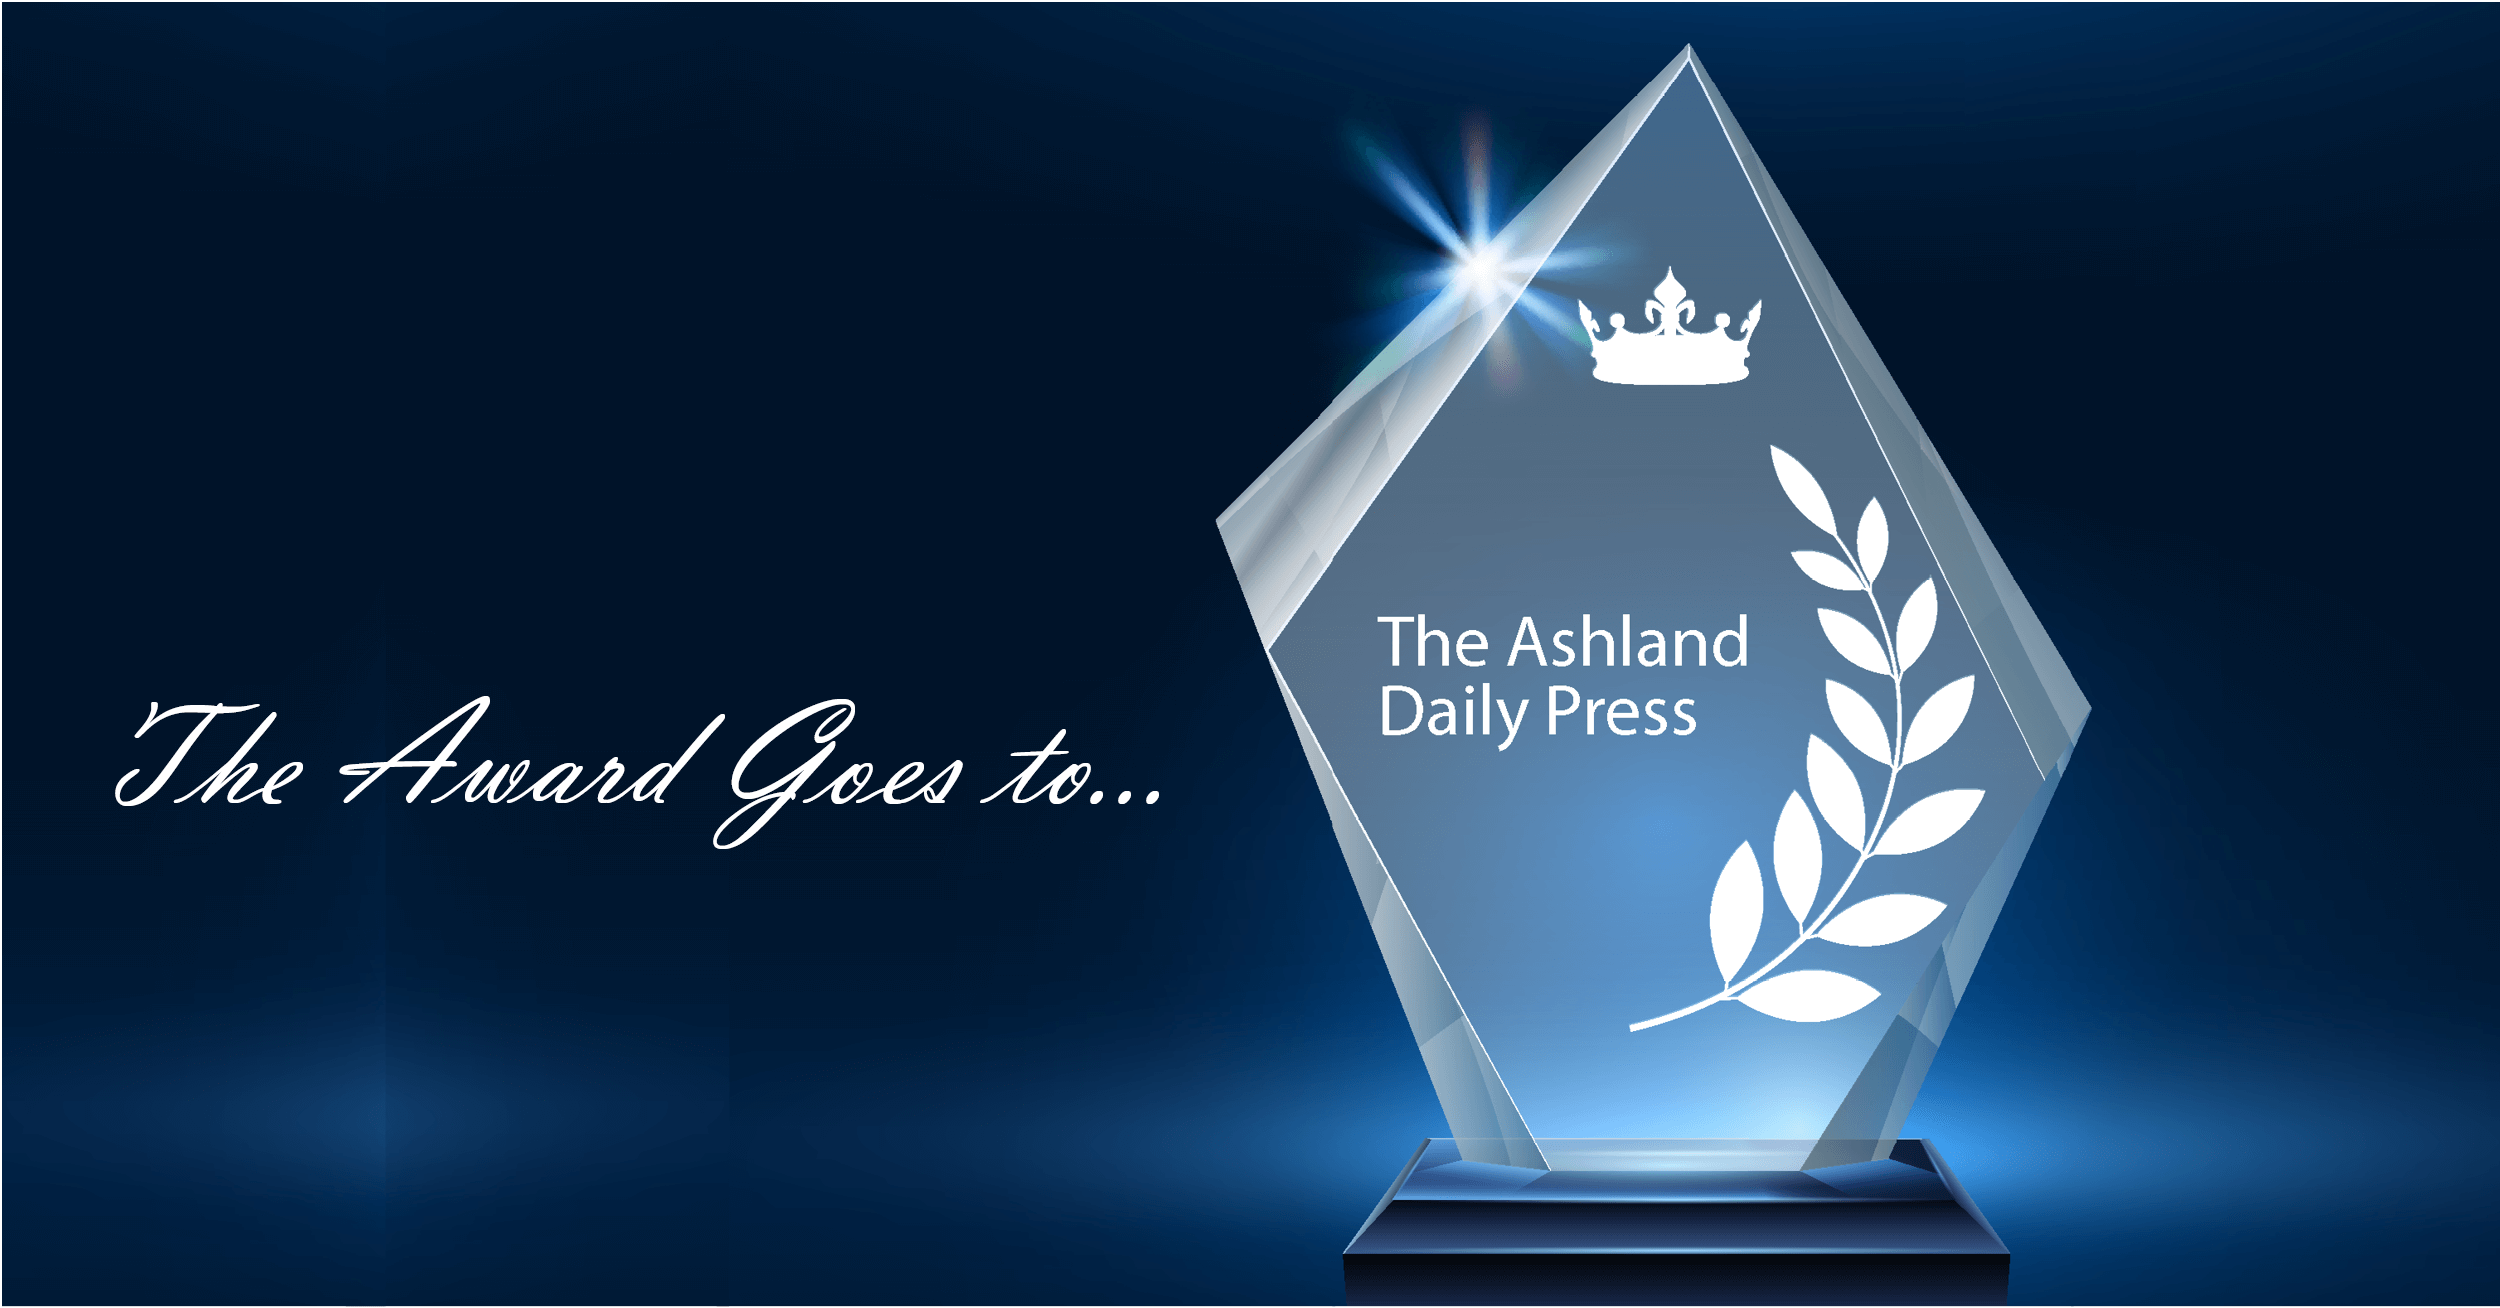 The award goes to...The Ashland Daily Press